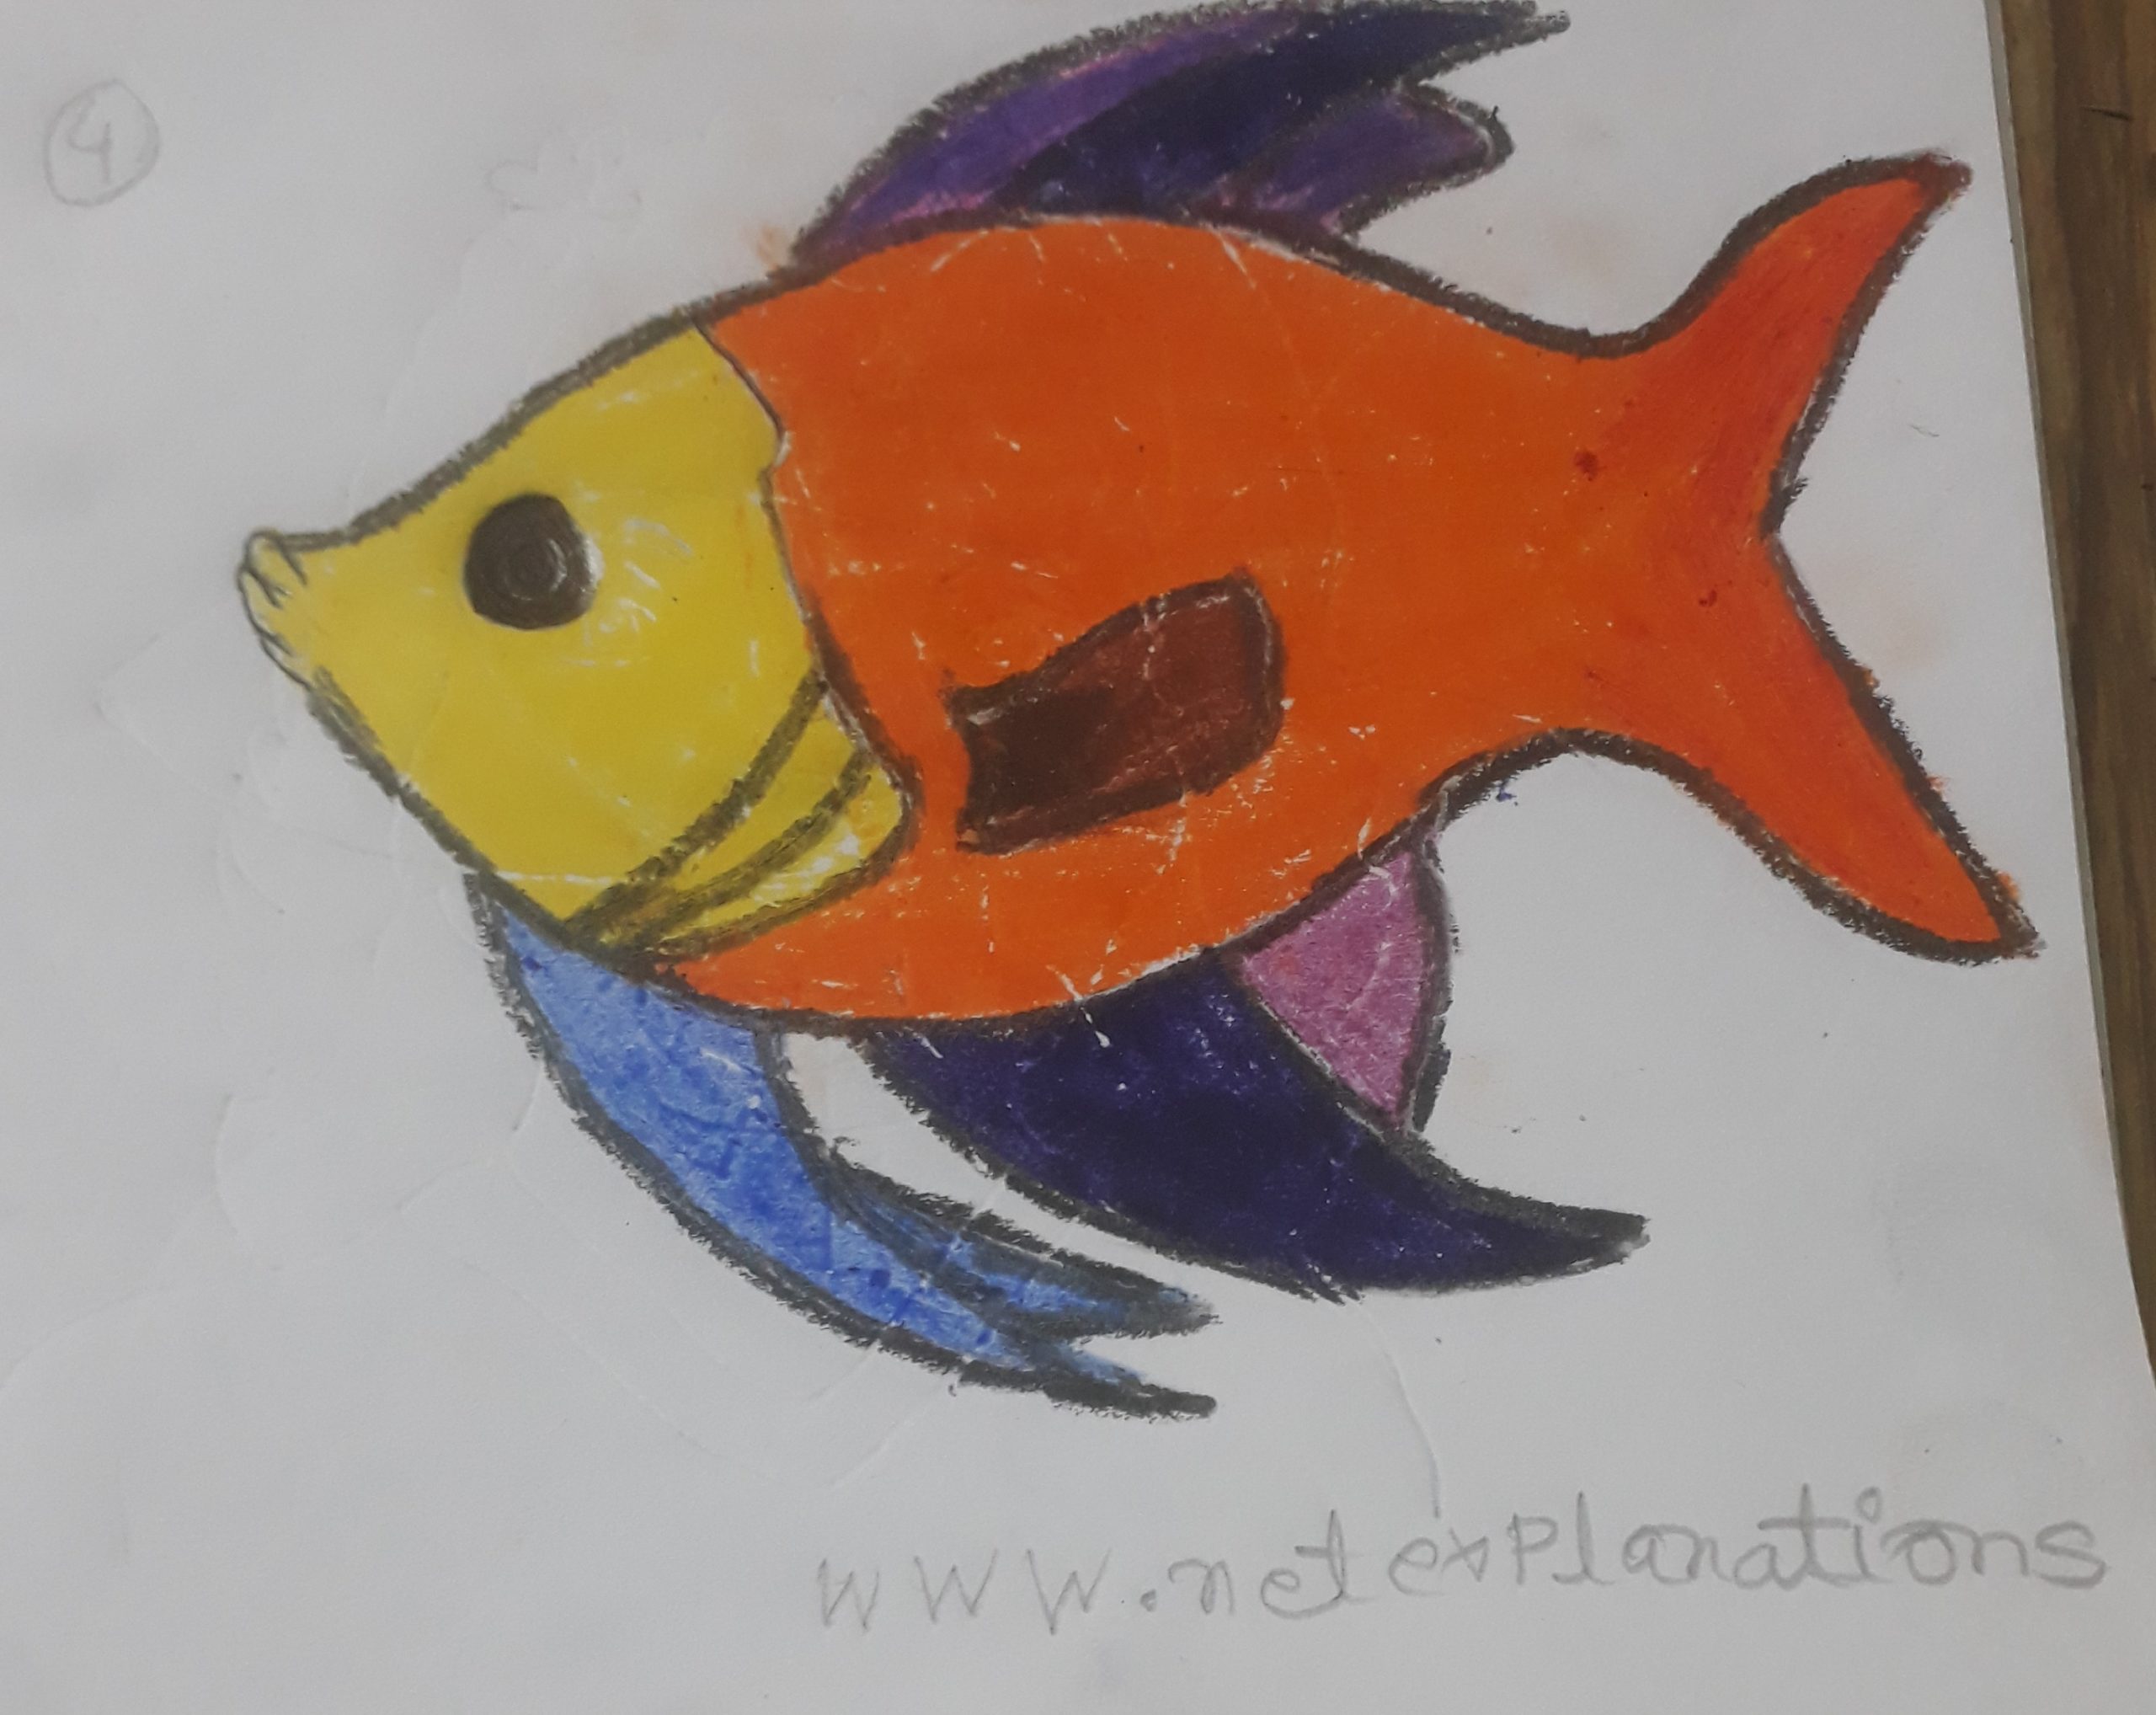 Details more than 76 simple fish drawing latest - xkldase.edu.vn